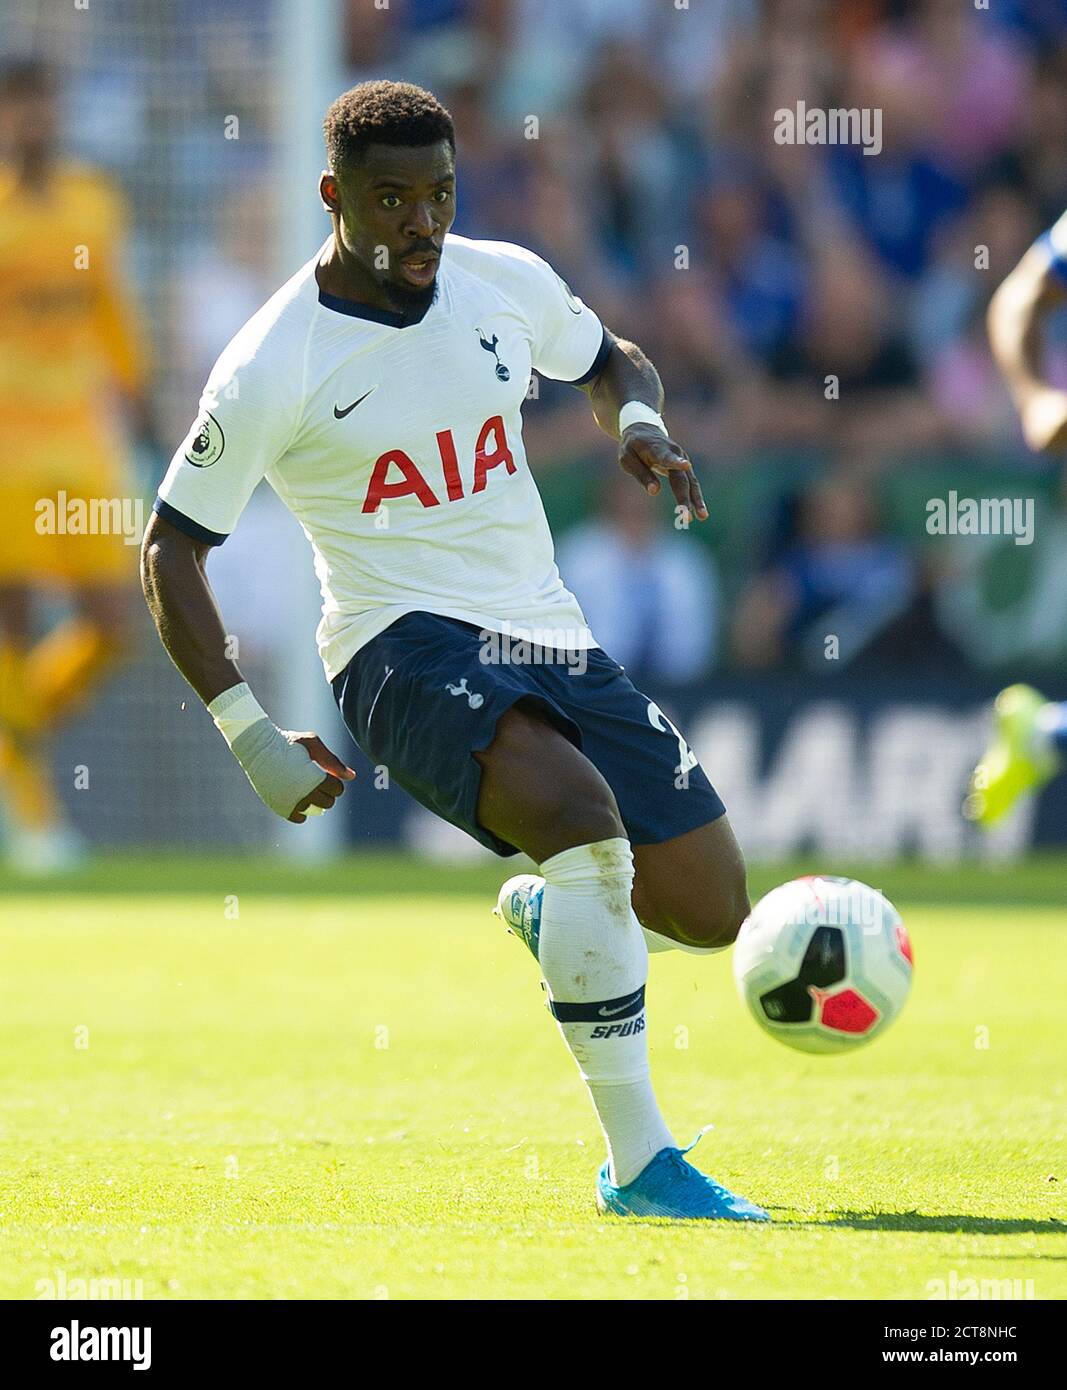 Serge Aurier Von Tottenham Hotspors. Leicester City V Spurs Leicester City V Spurs BILDNACHWEIS : © MARK PAIN / ALAMY STOCK FOTO Stockfoto